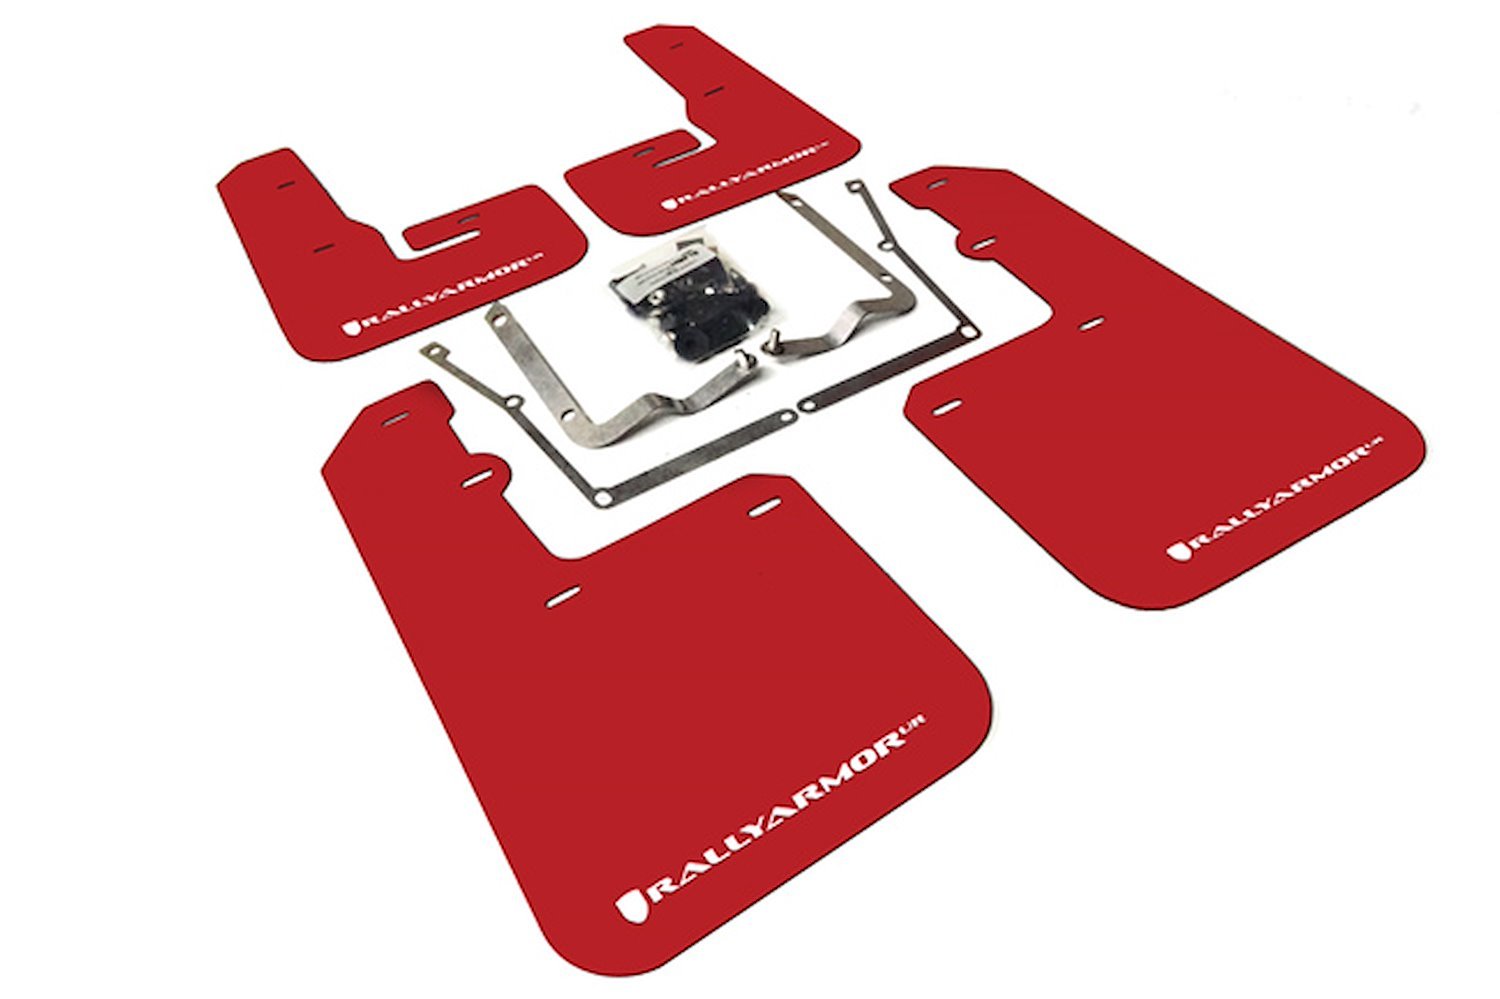 MF42URRDWH Mud Flap Kit for 2015-2019 Volkswagen Jetta - Red Mud Flap/White Logo